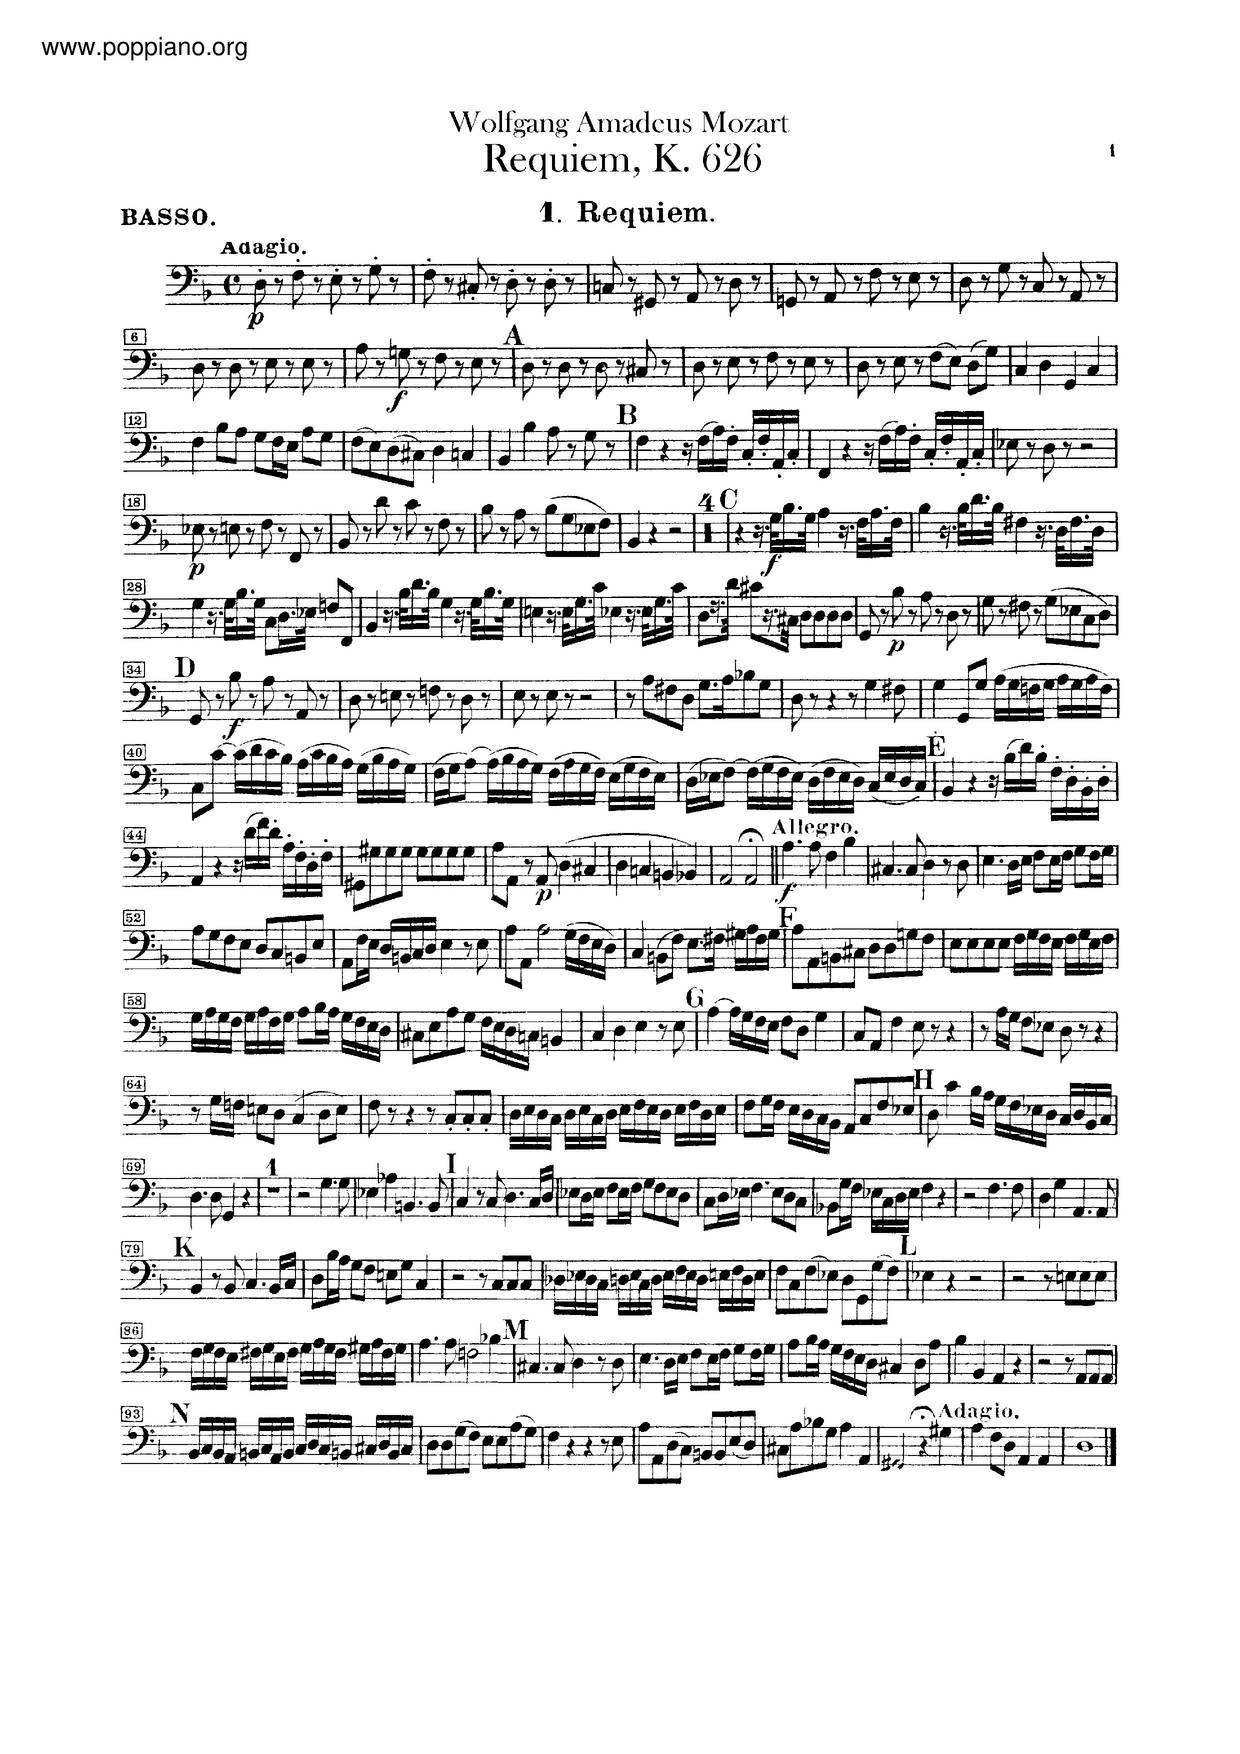 Requiem, K. 626: Lacrimosa Score